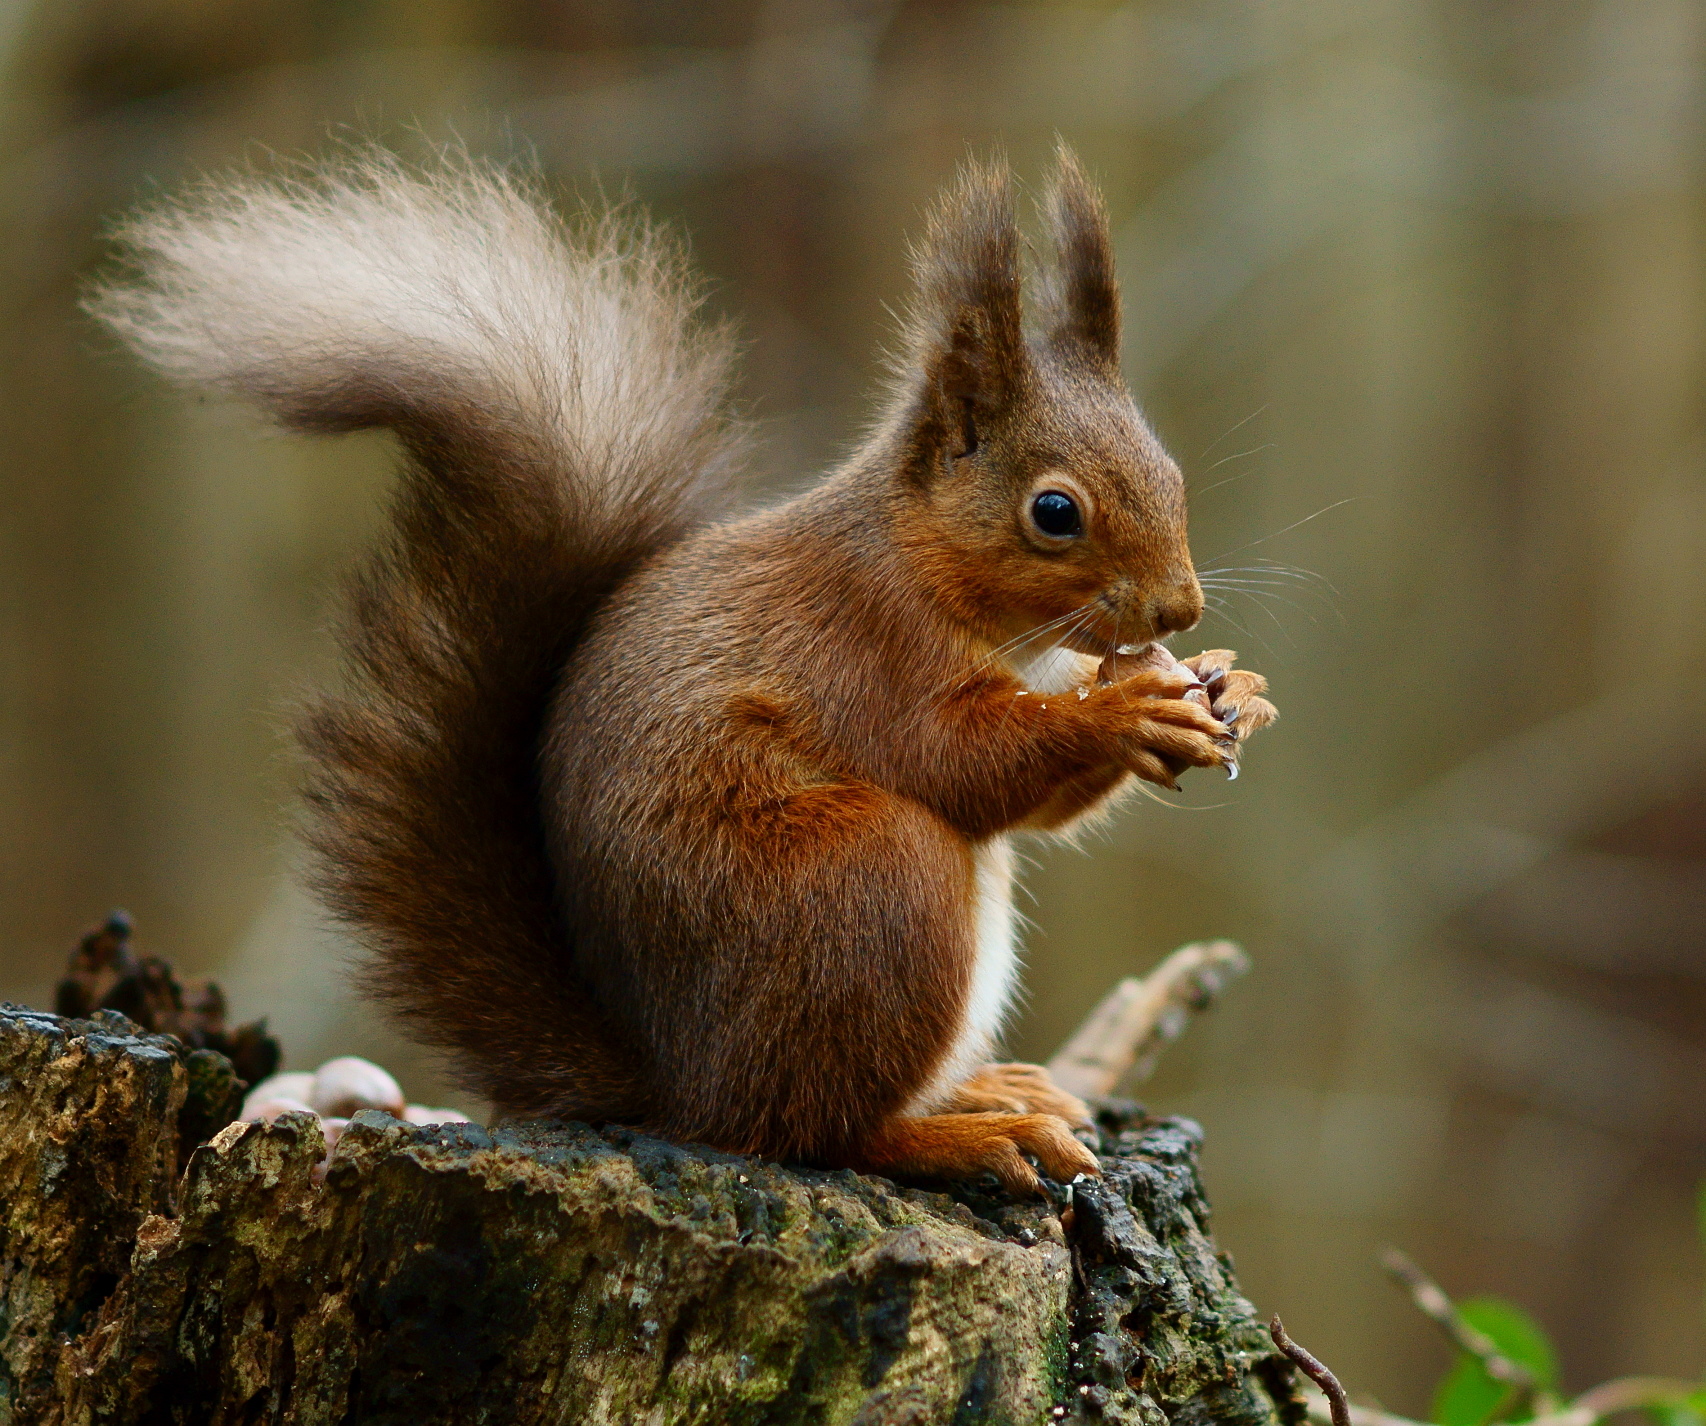 File:Squirrel posing.jpg - Wikipedia